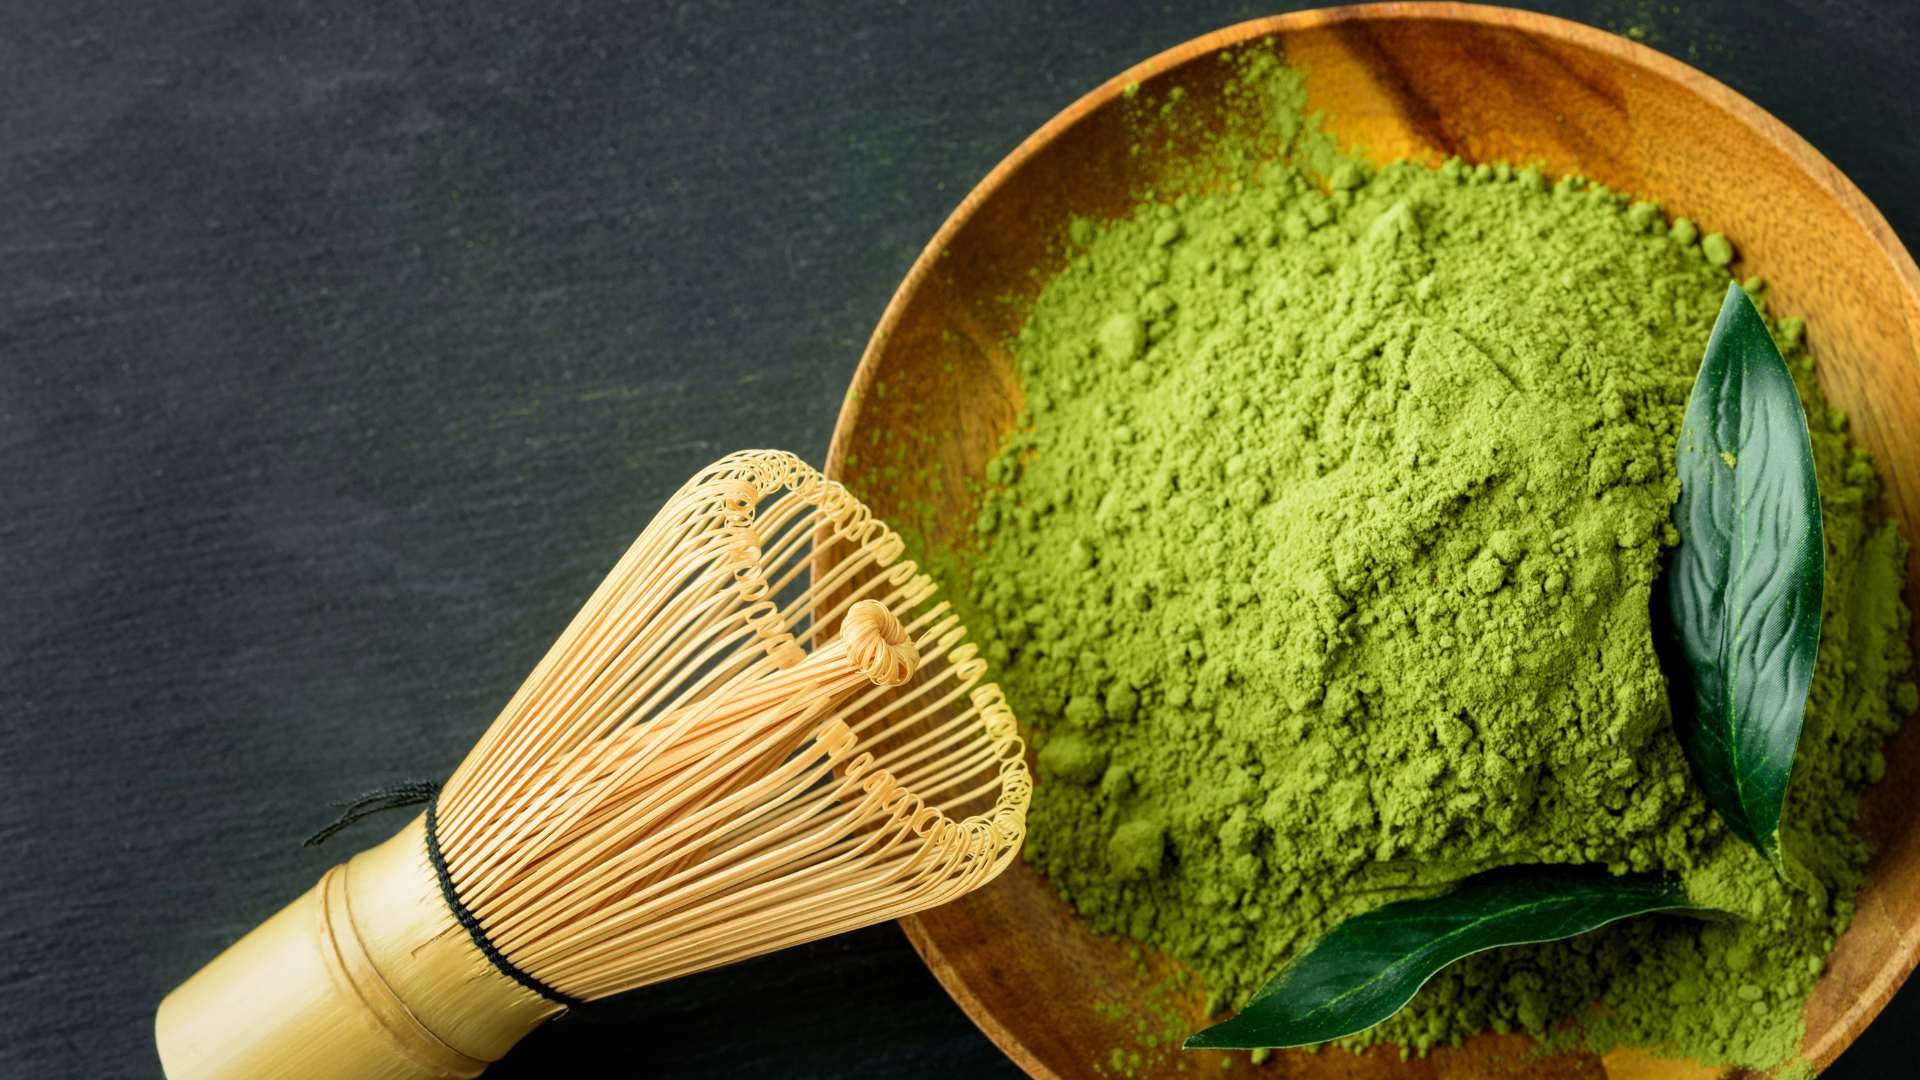 Matcha green tea powder in a bowl next to a bamboo matcha whisk